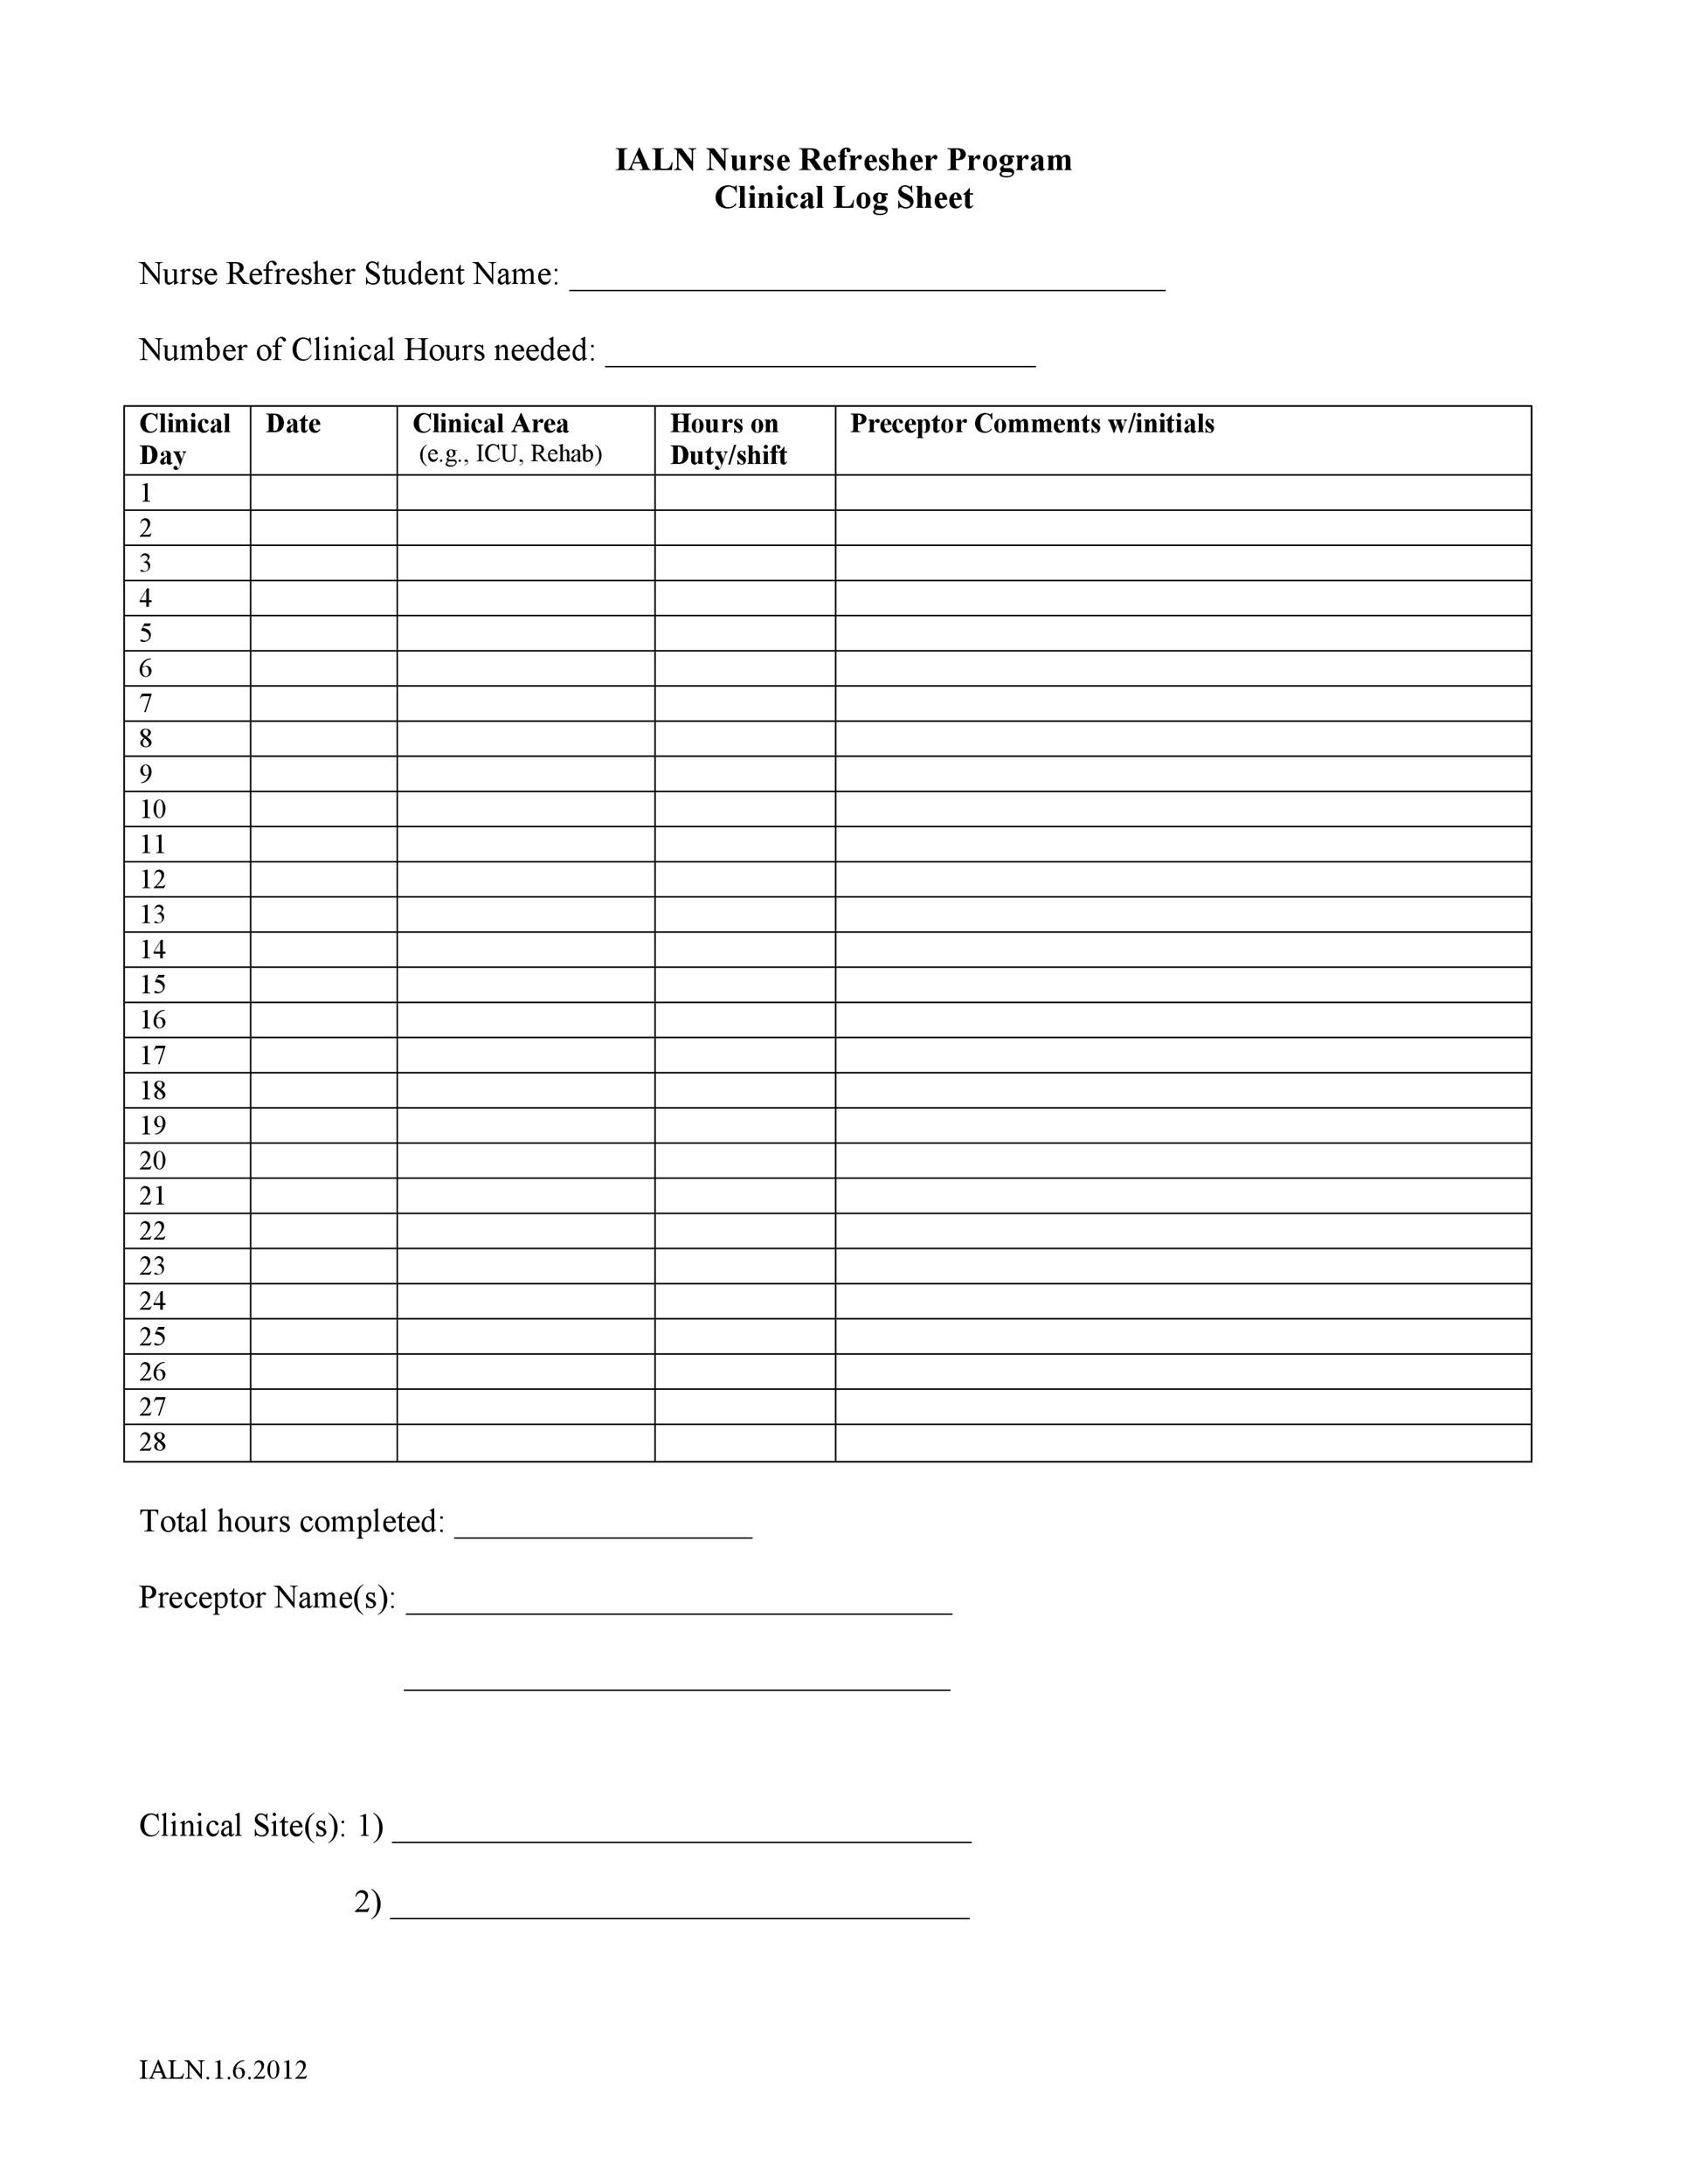 50 Printable Log Sheet Templates Direct Download ᐅ TemplateLab